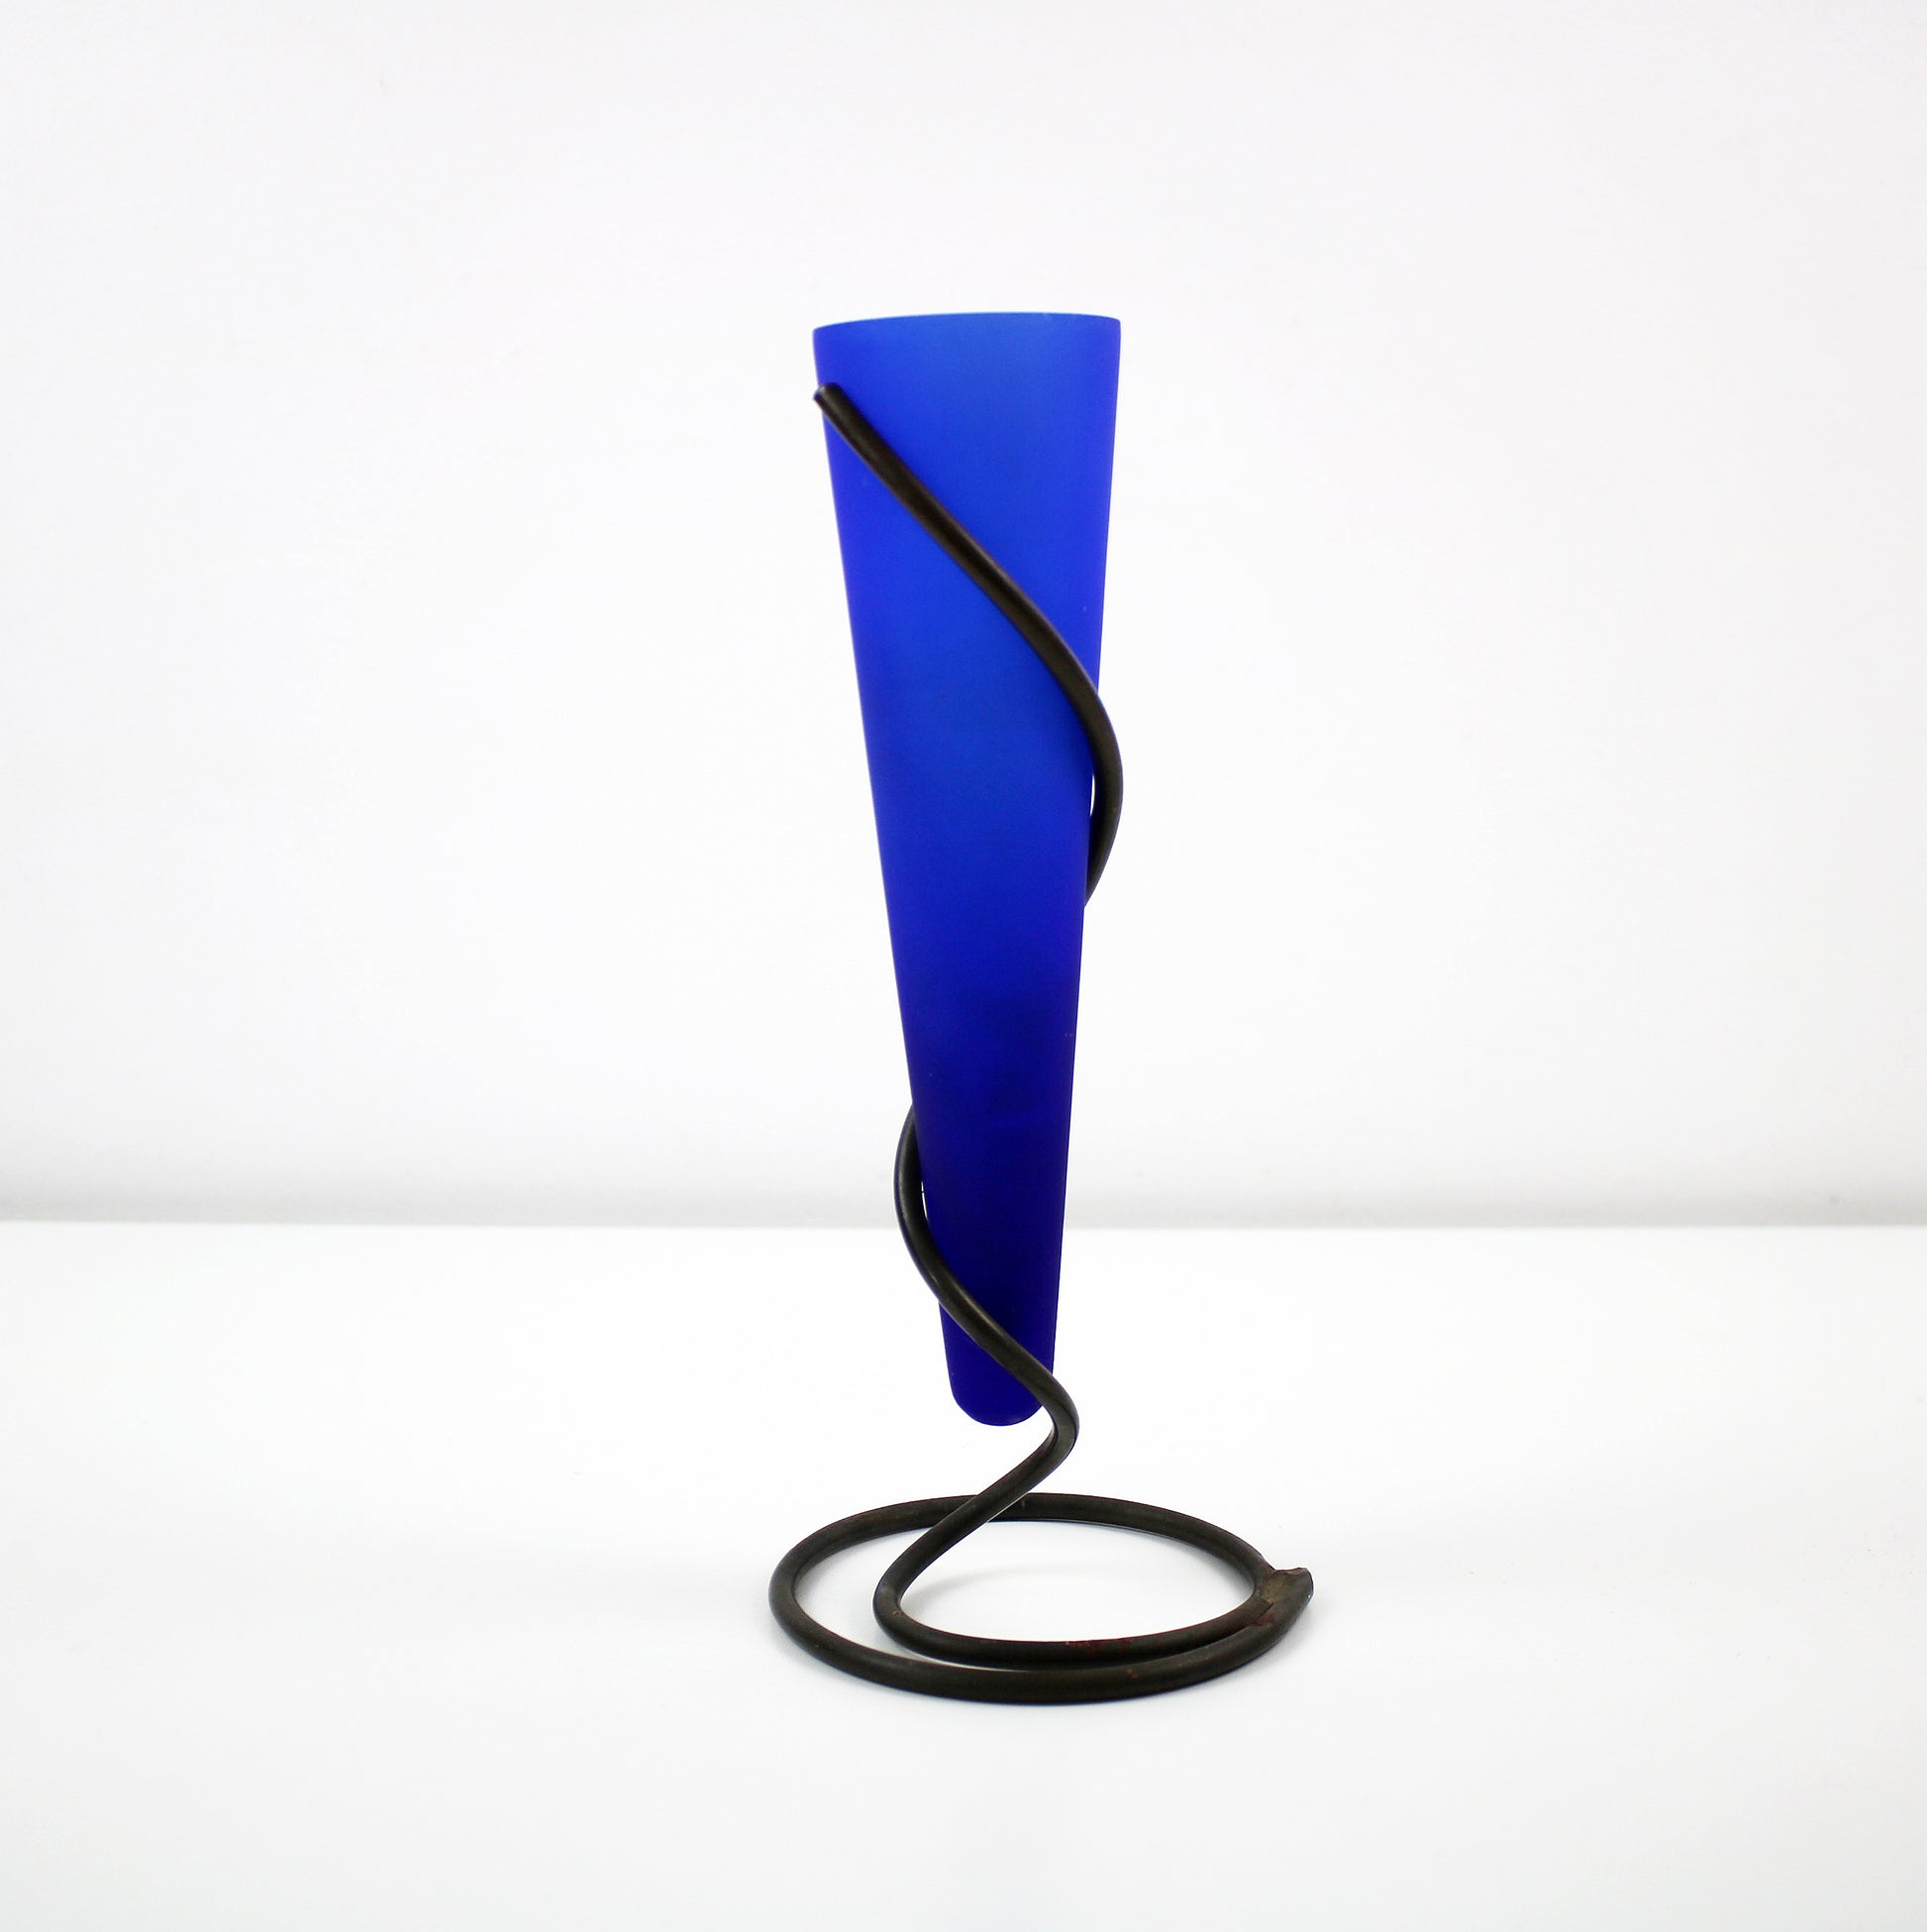 1980s deep blue glass cone vase in metal spiral holder